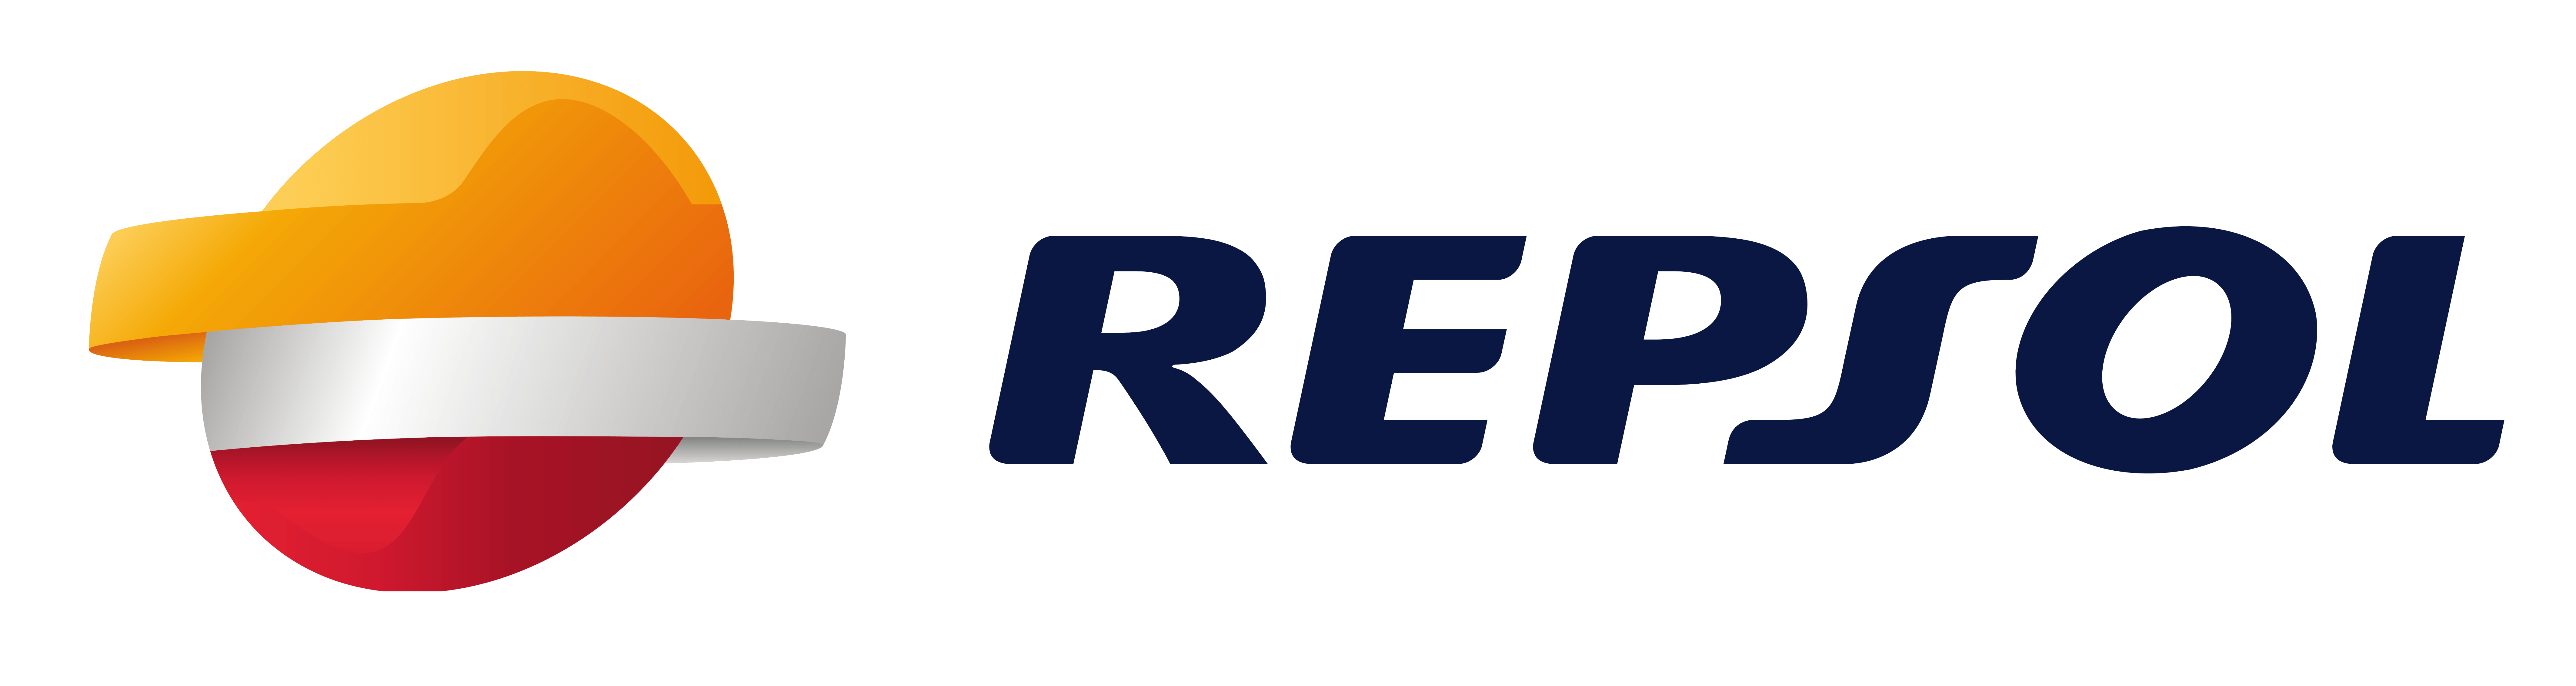 Repsol Logo - Repsol